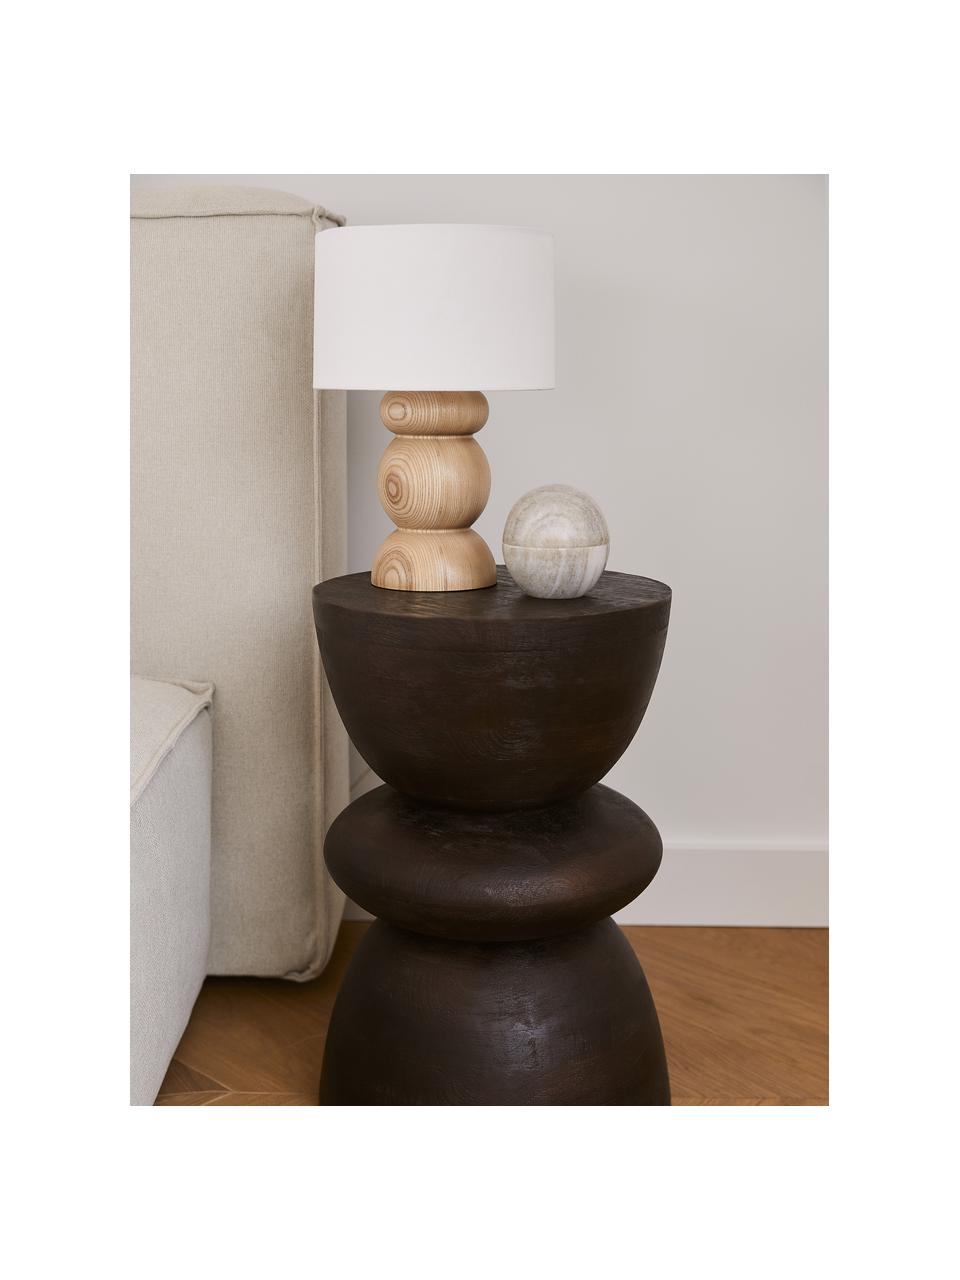 Lámpara de mesa de madera de fresno Sascha, Pantalla: tejido en aspecto lino, Cable: cubierto en tela, Madera clara, Ø 24 x Al 34 cm